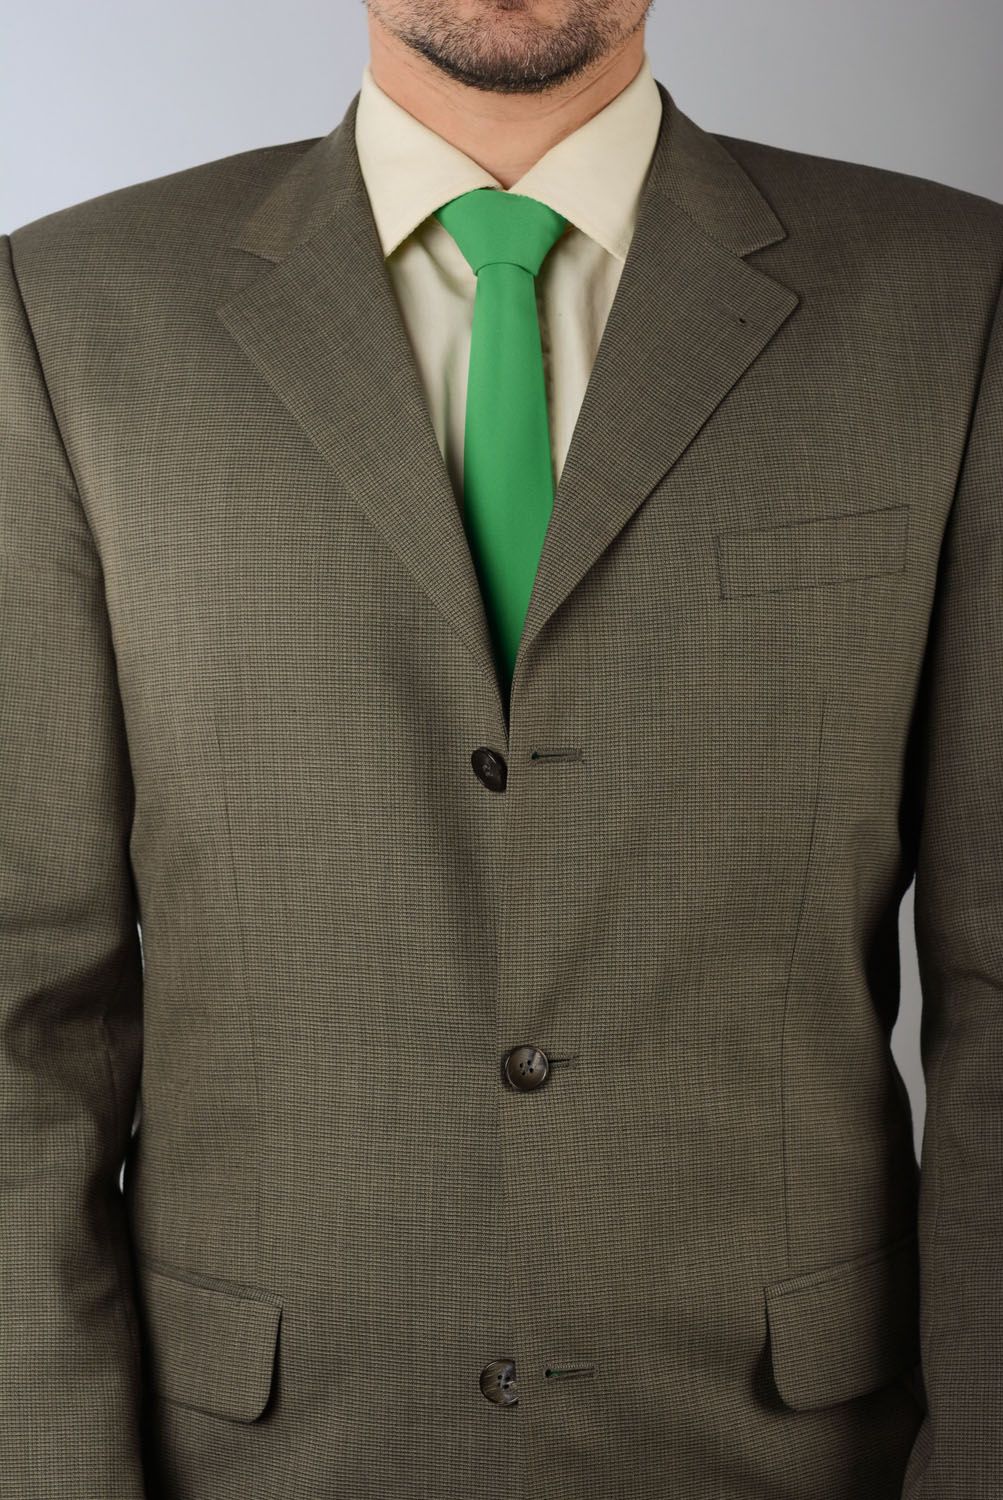 Cravate en gabardine verte faite main photo 4